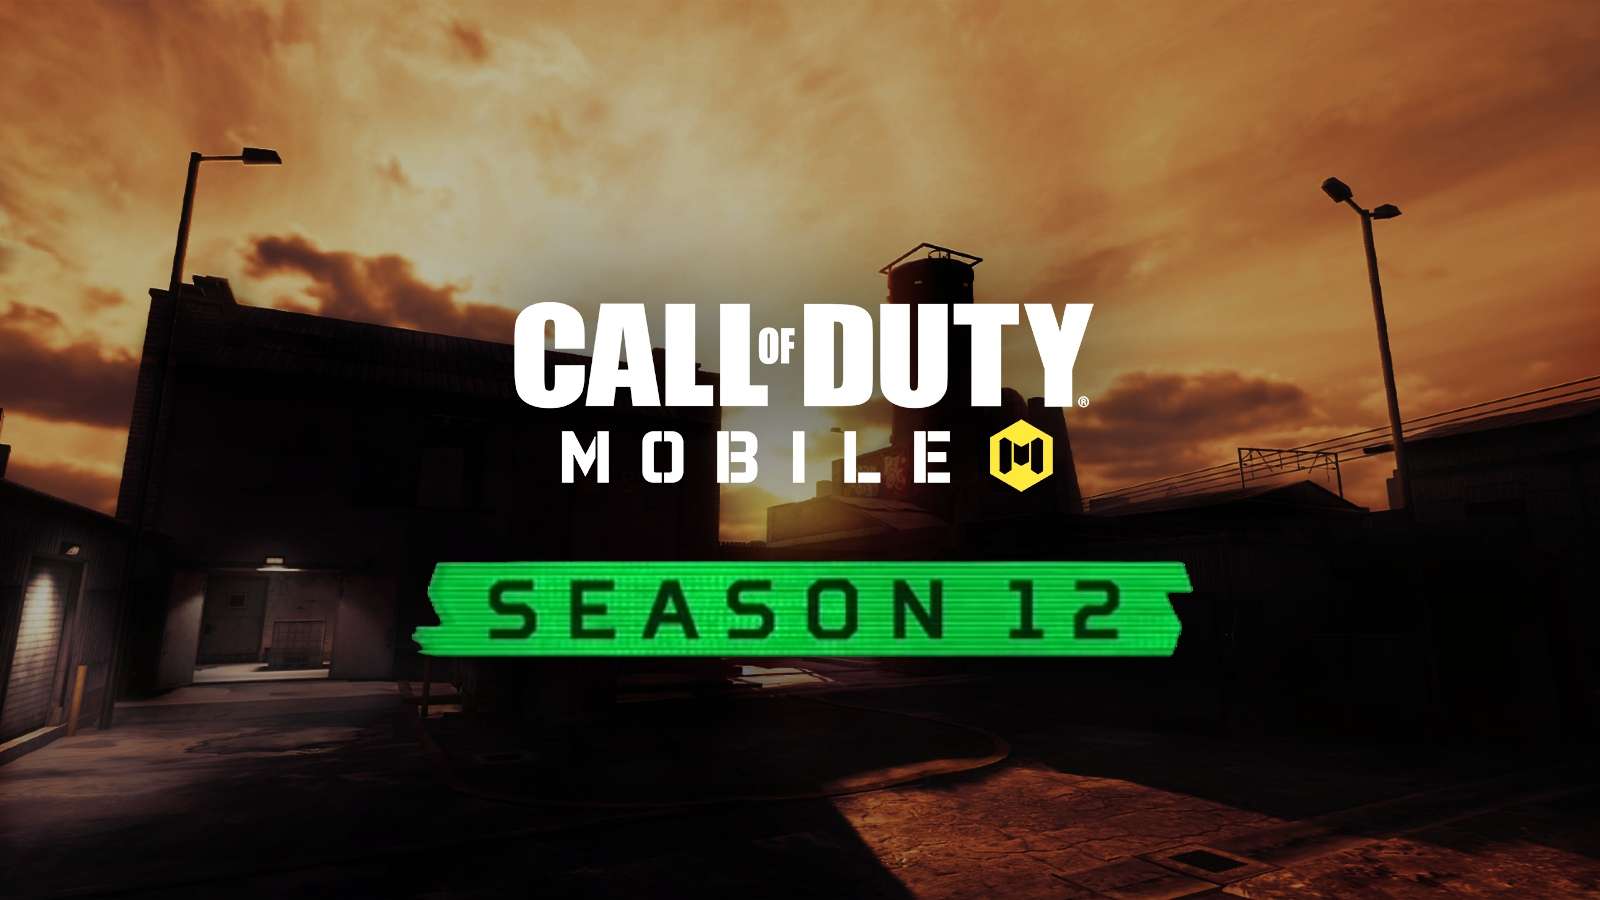 cod-mobile-season-12-date-info-revealed